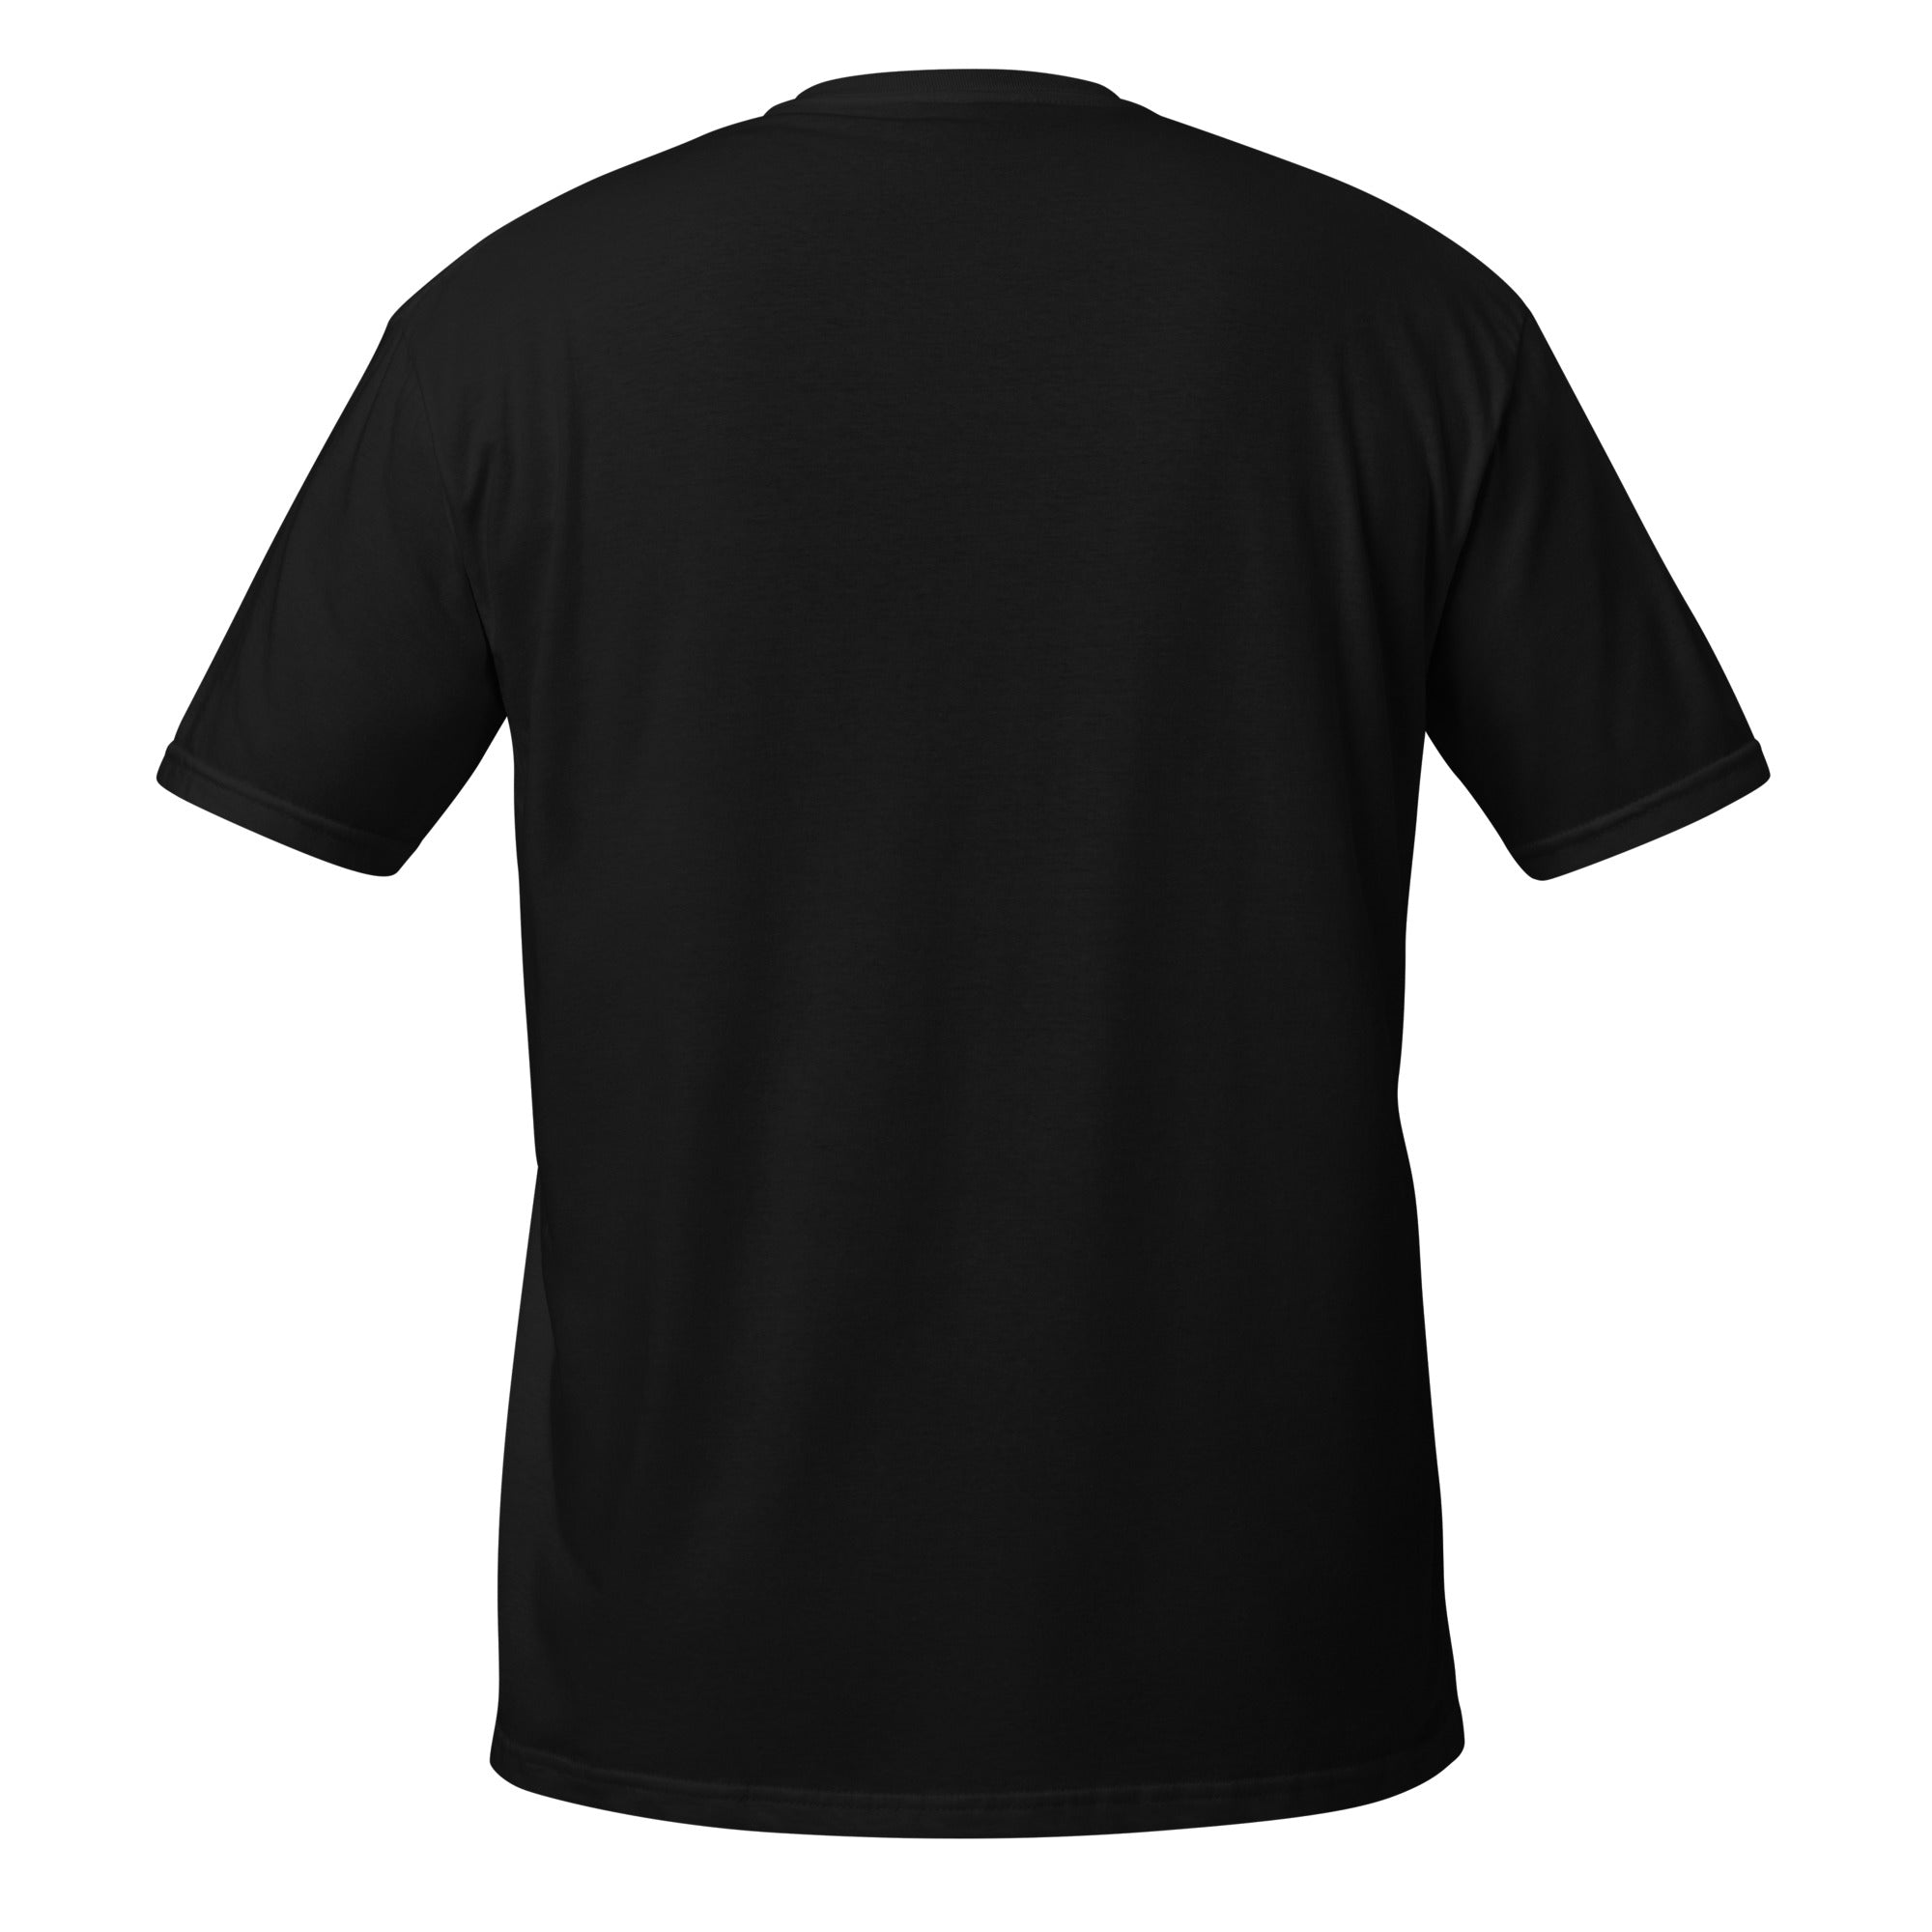 Short-Sleeve Unisex T-Shirt- Knock knock anybody homo